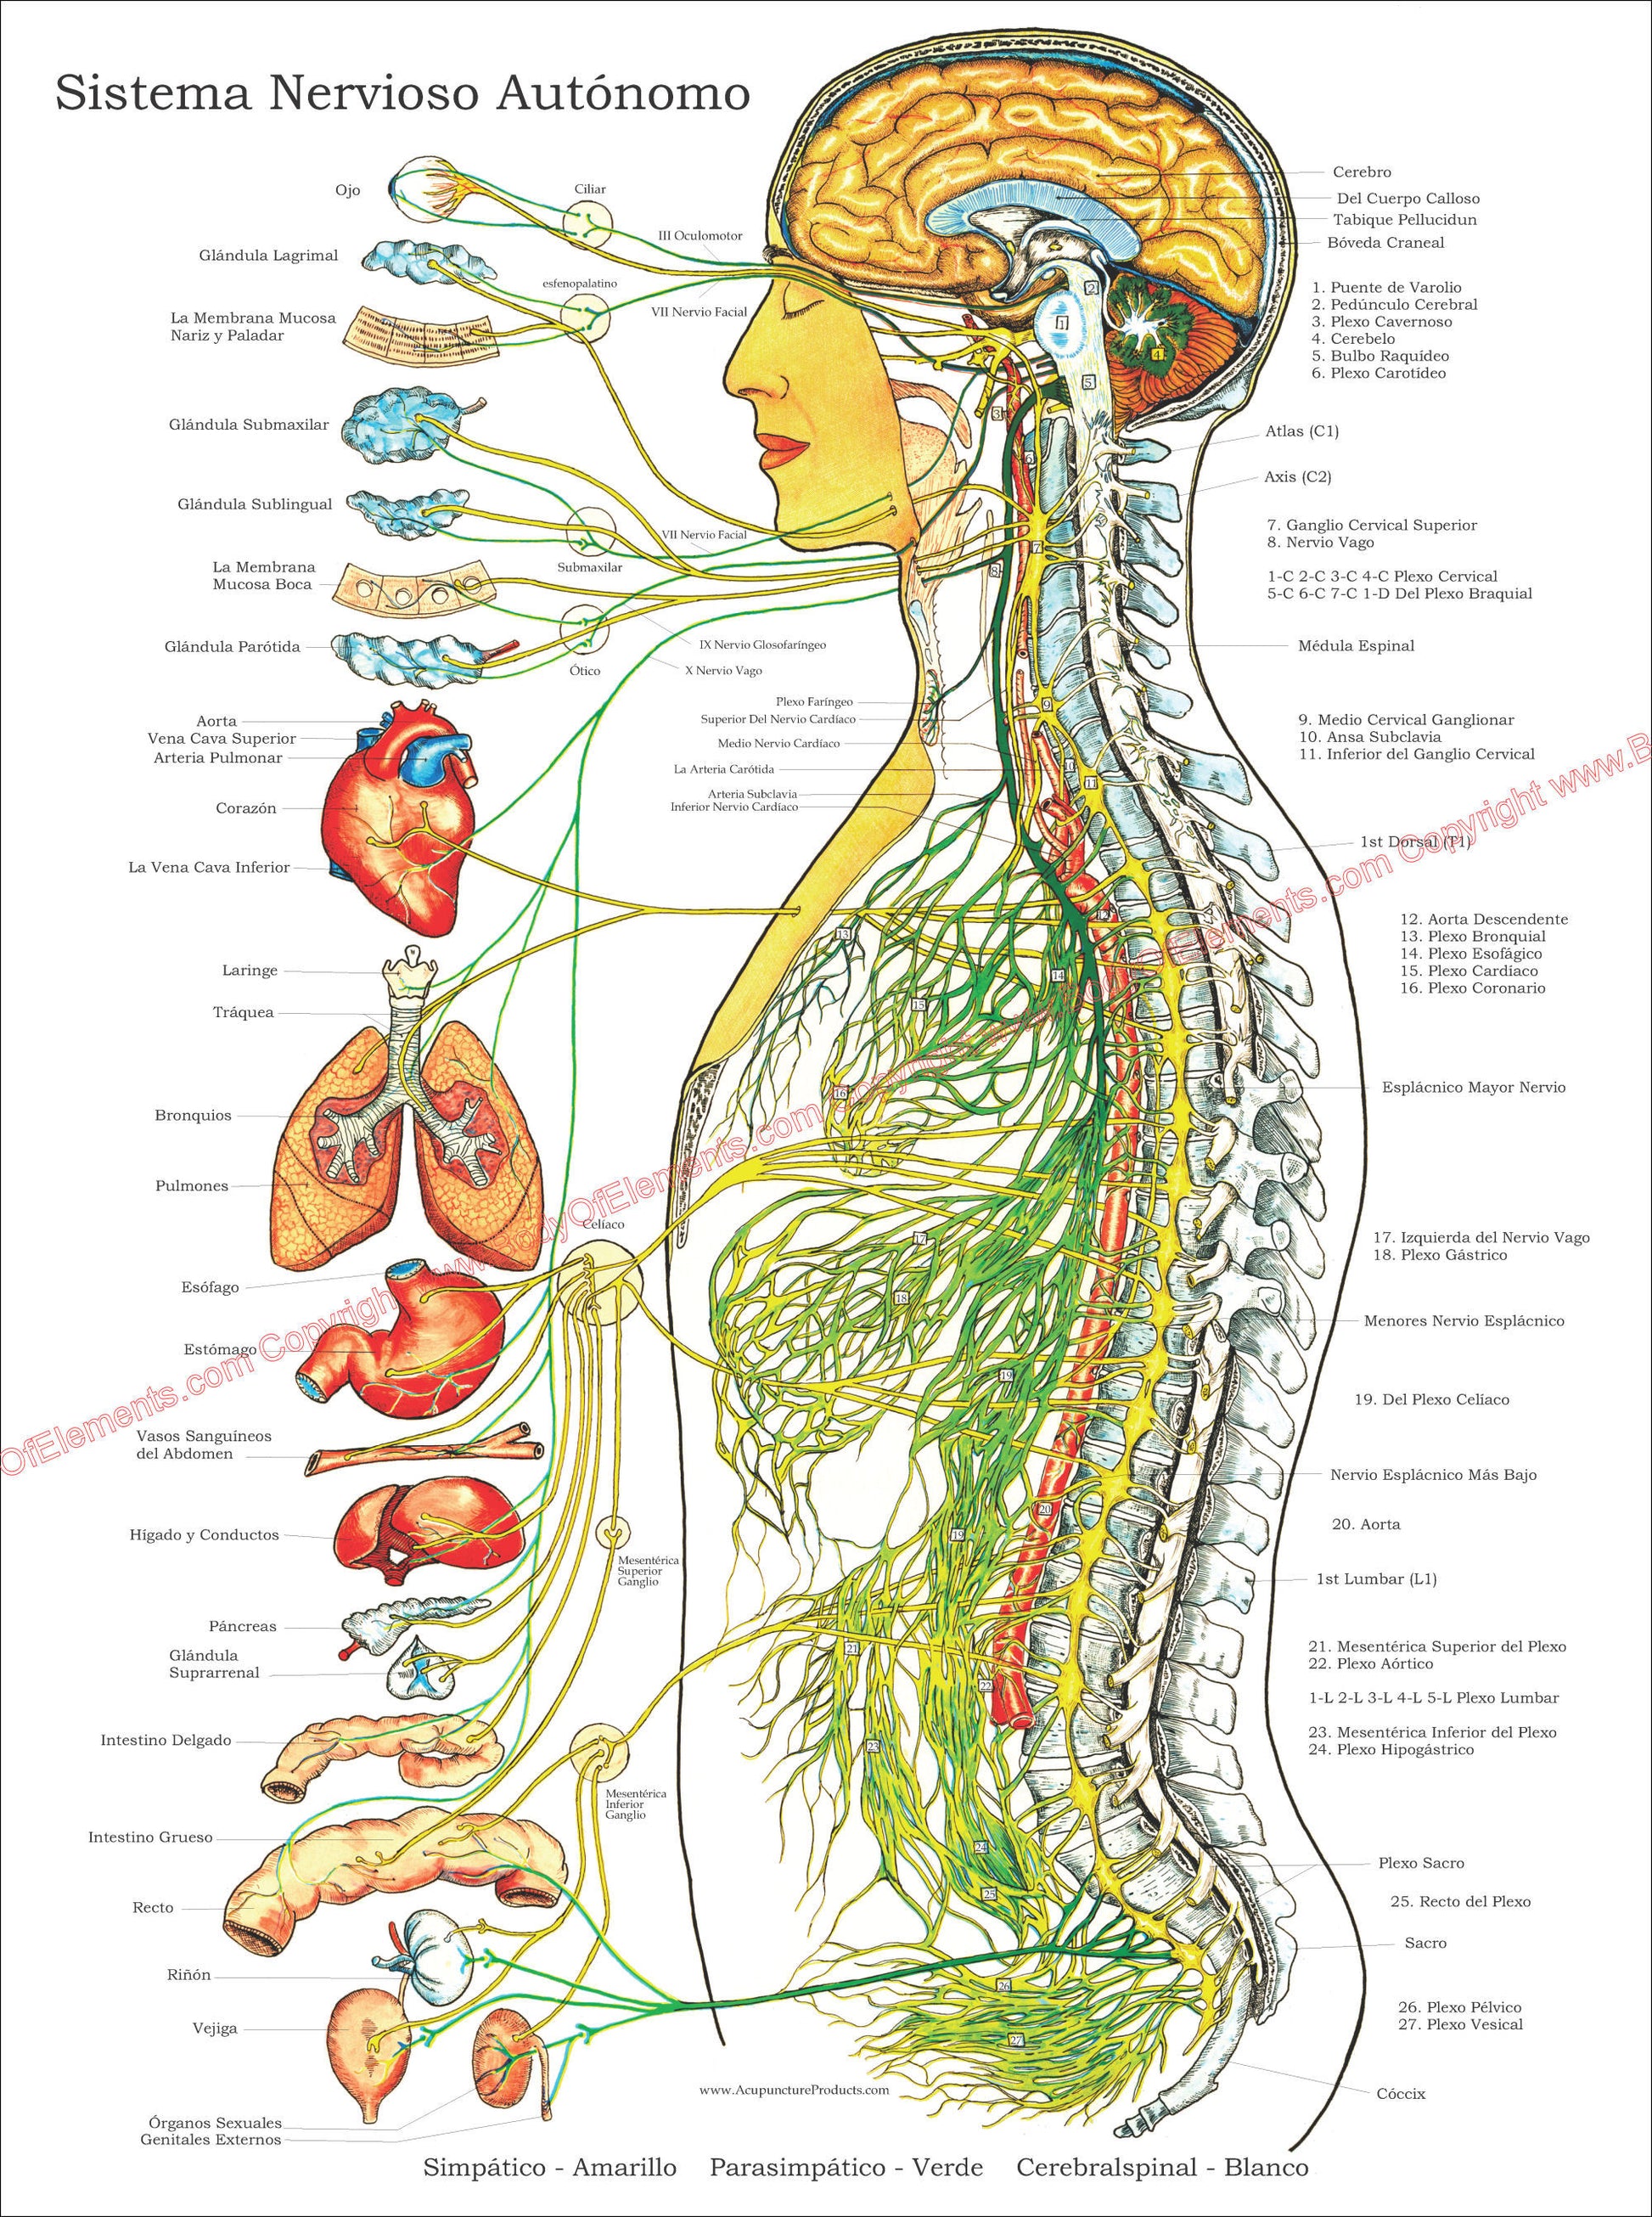 Sistema nervioso autonomo